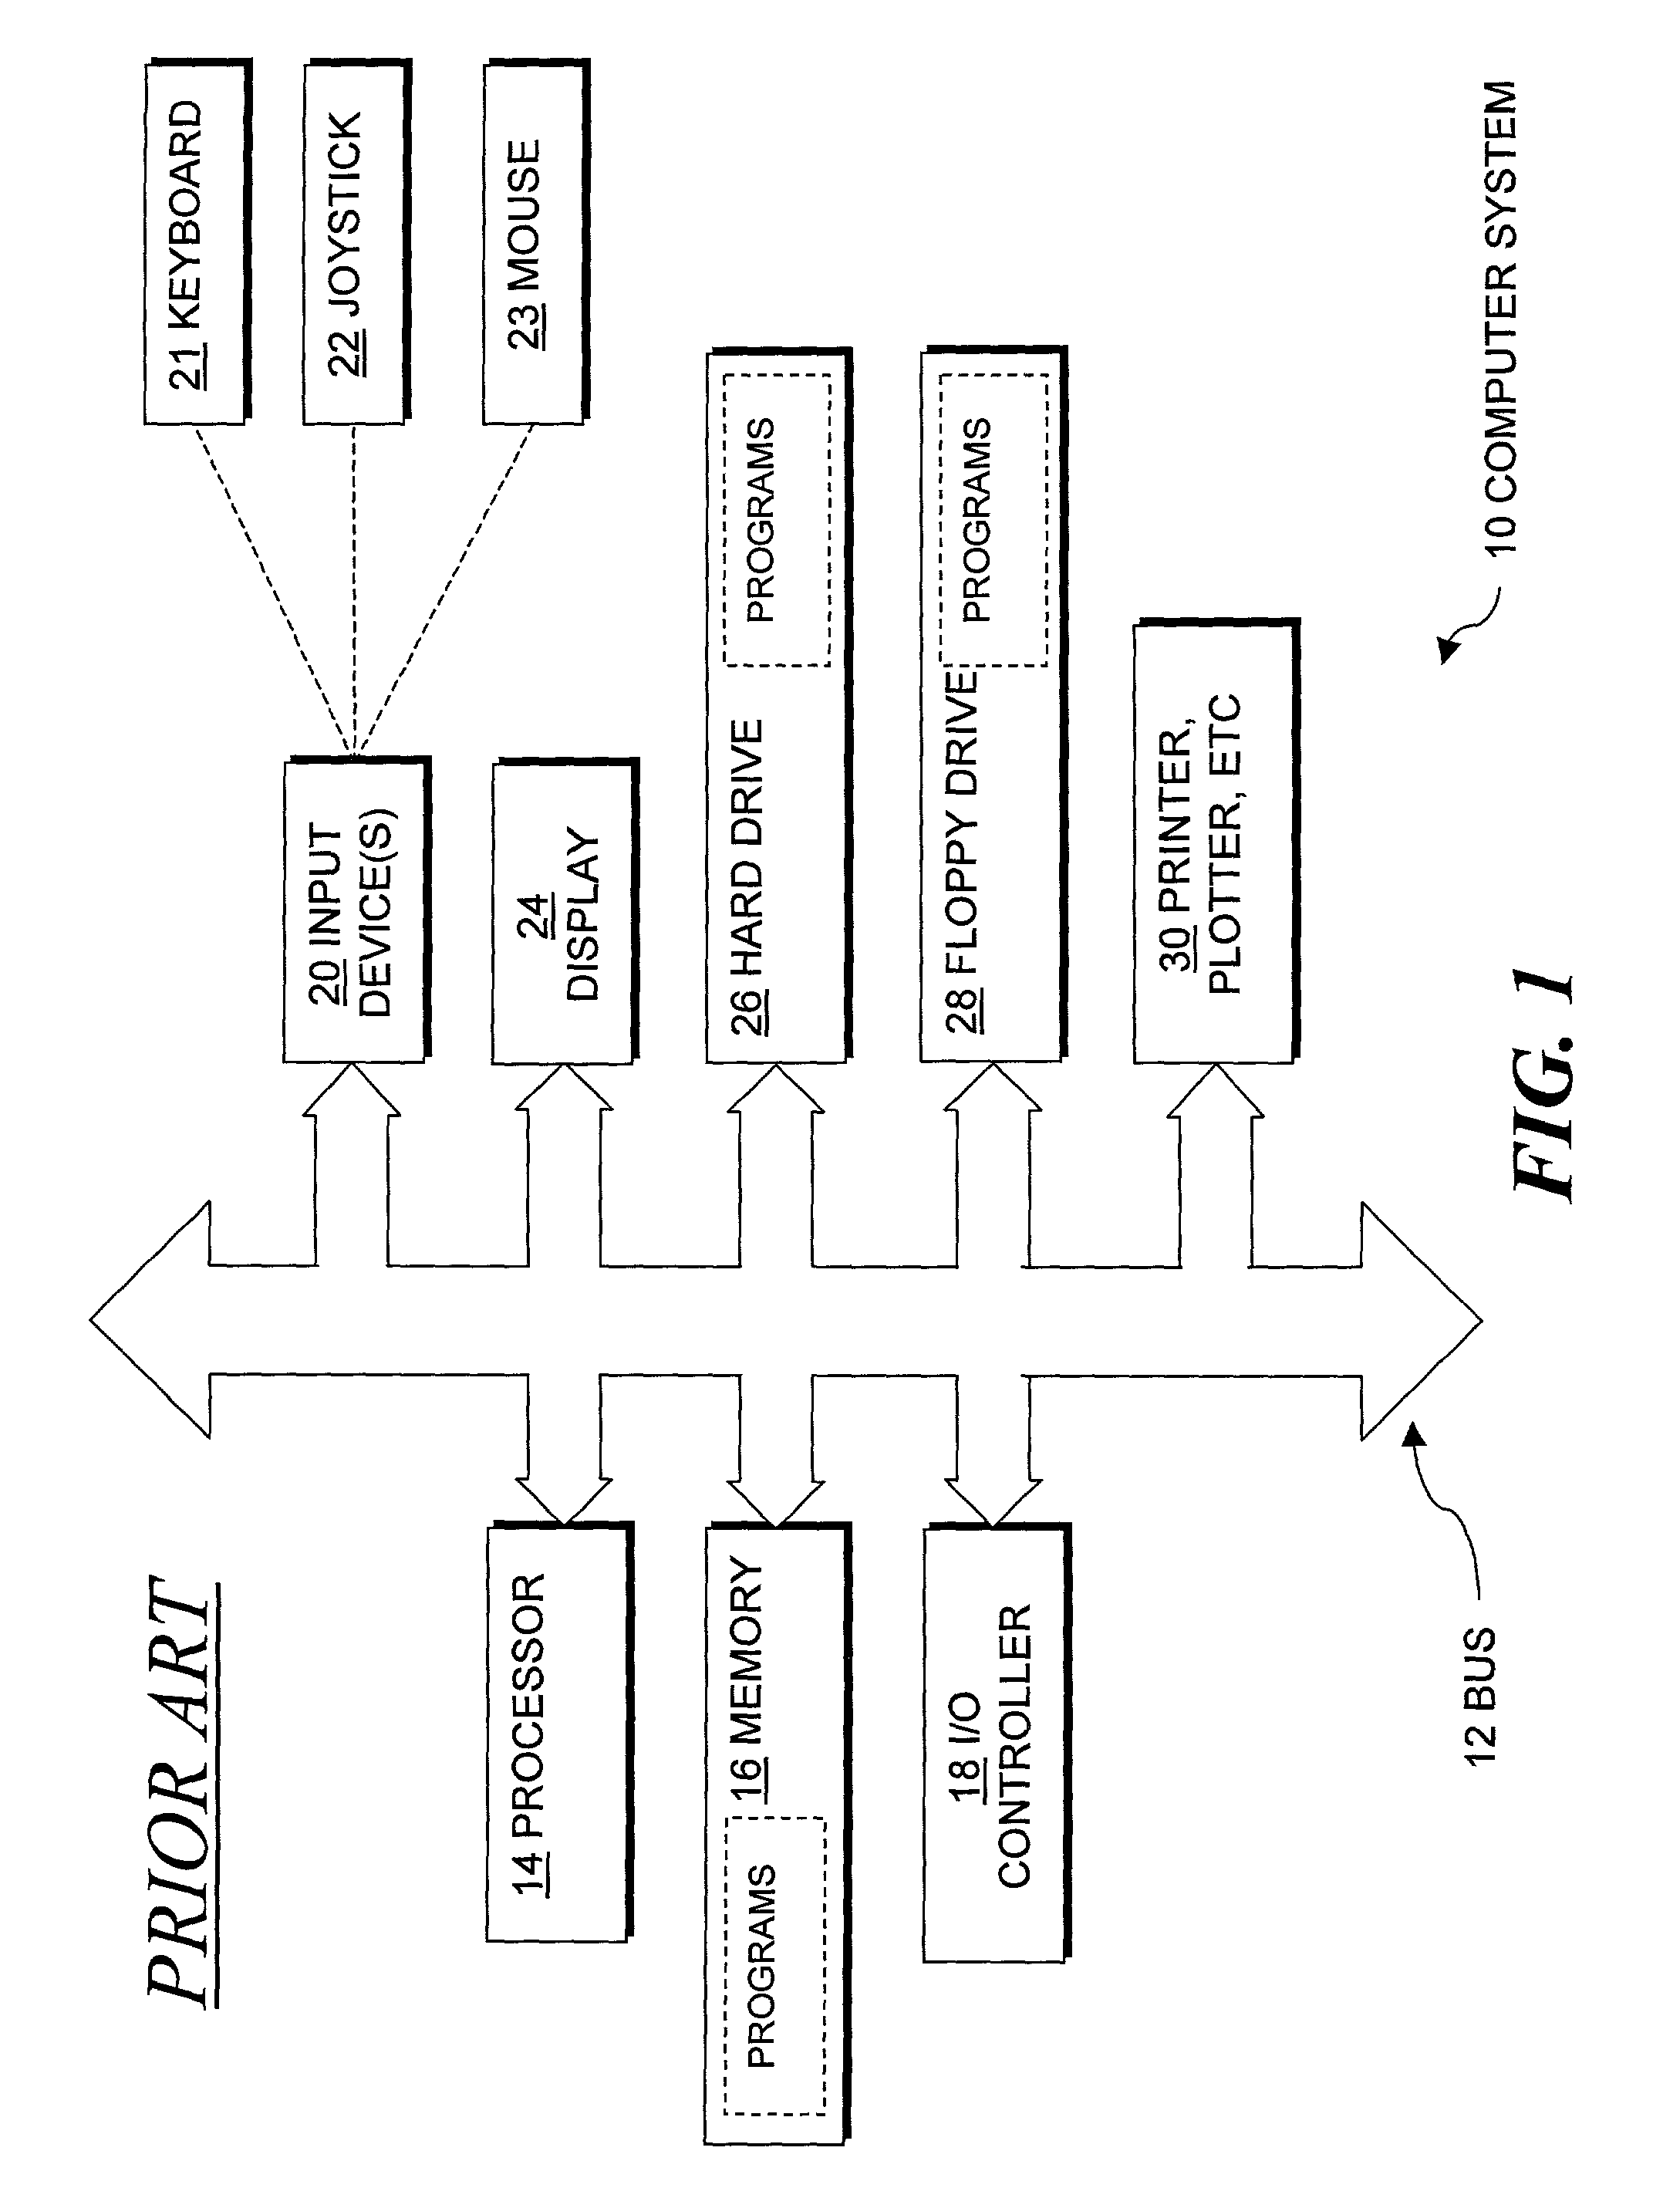 Methods and apparatus for computer bus error termination